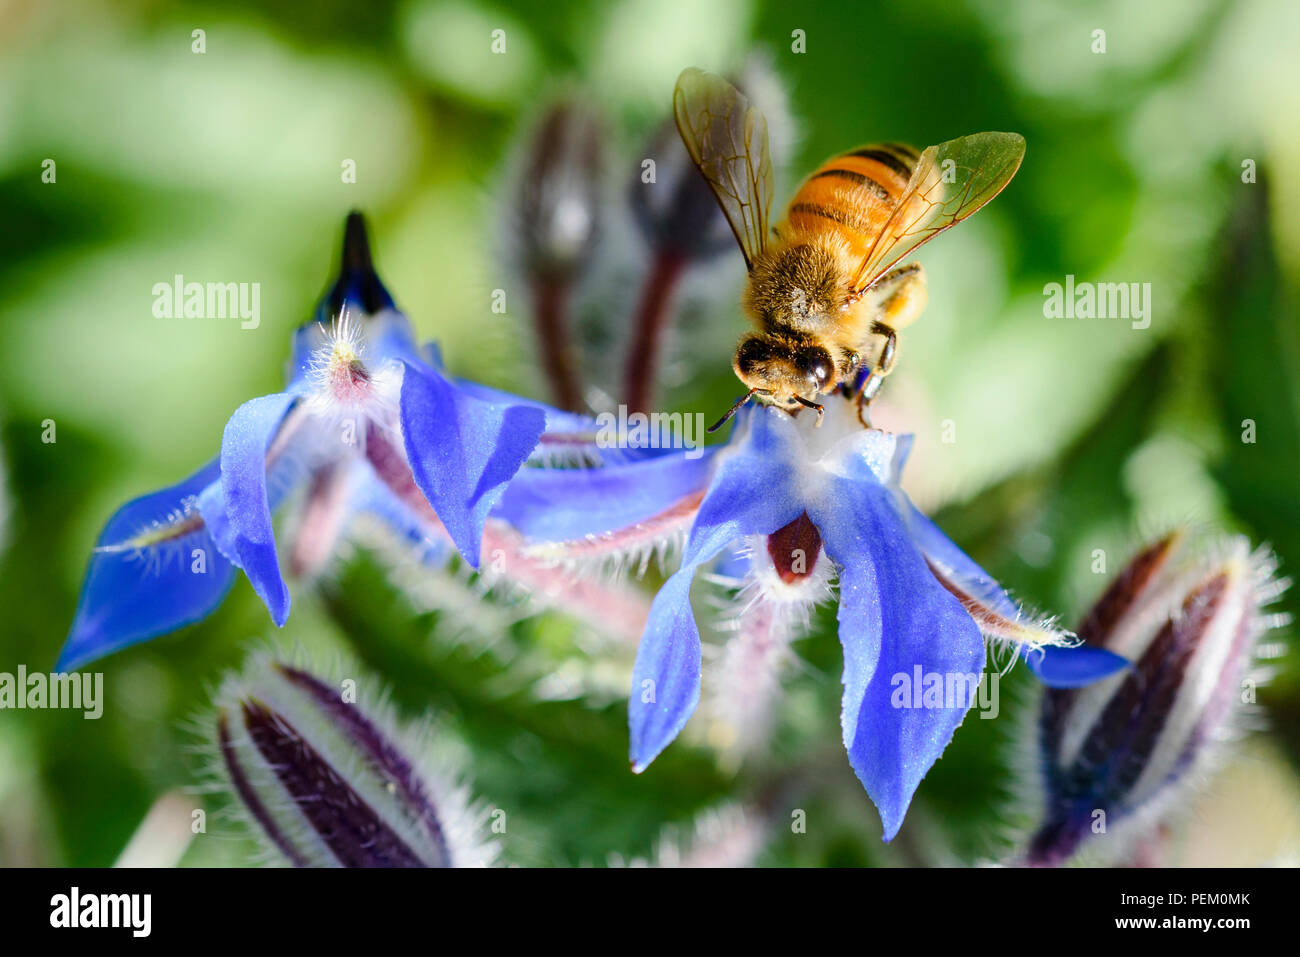 Bee on borage flower, Australia, close up view Stock Photo